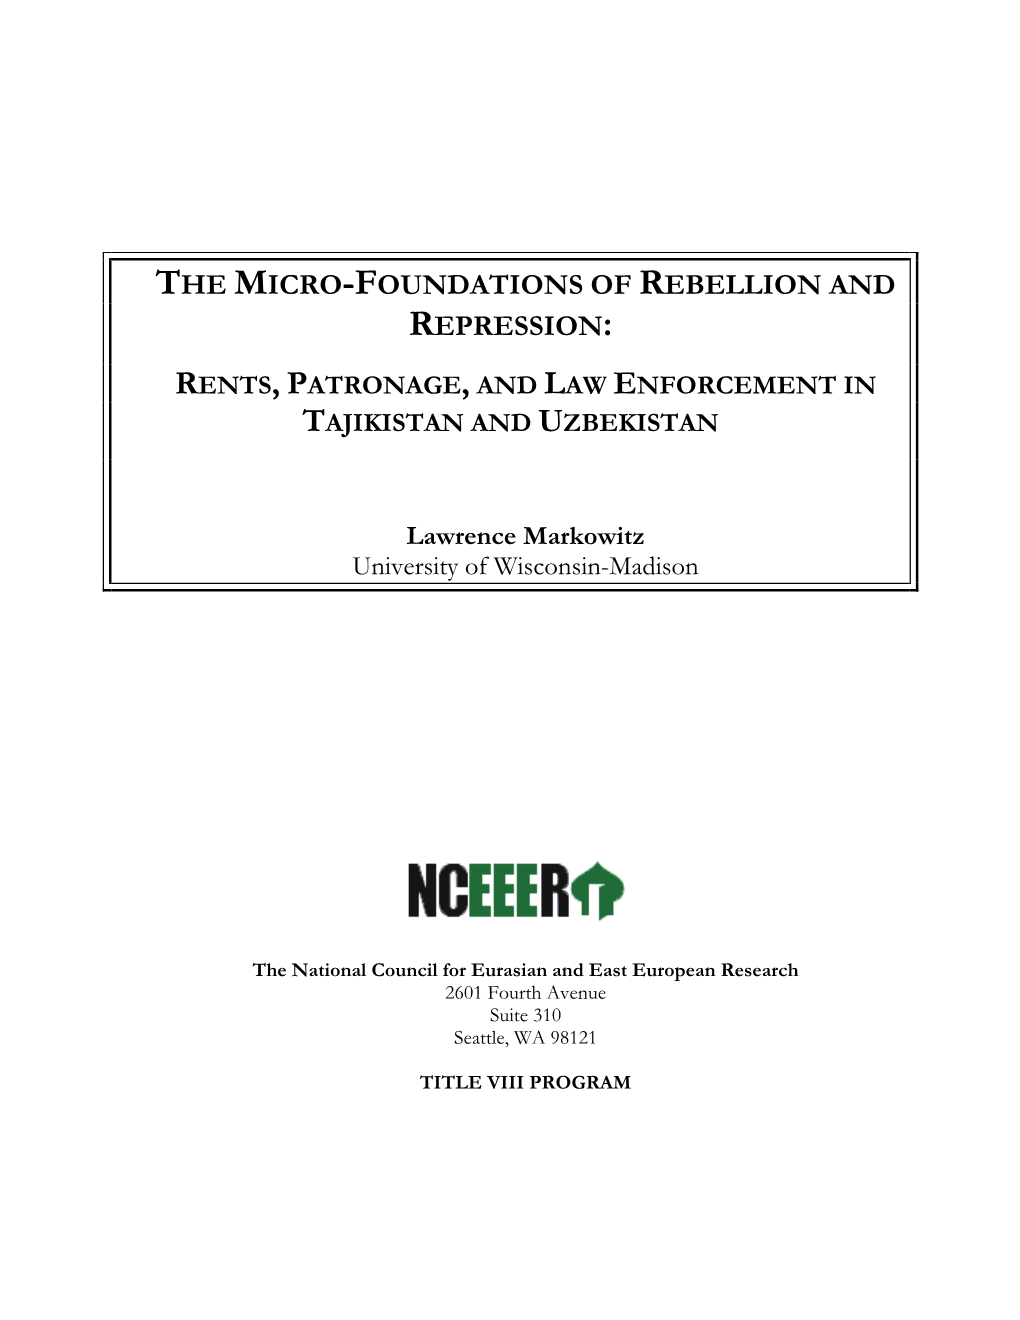 Rents, Patronage, and Law Enforcement in Tajikistan and Uzbekistan